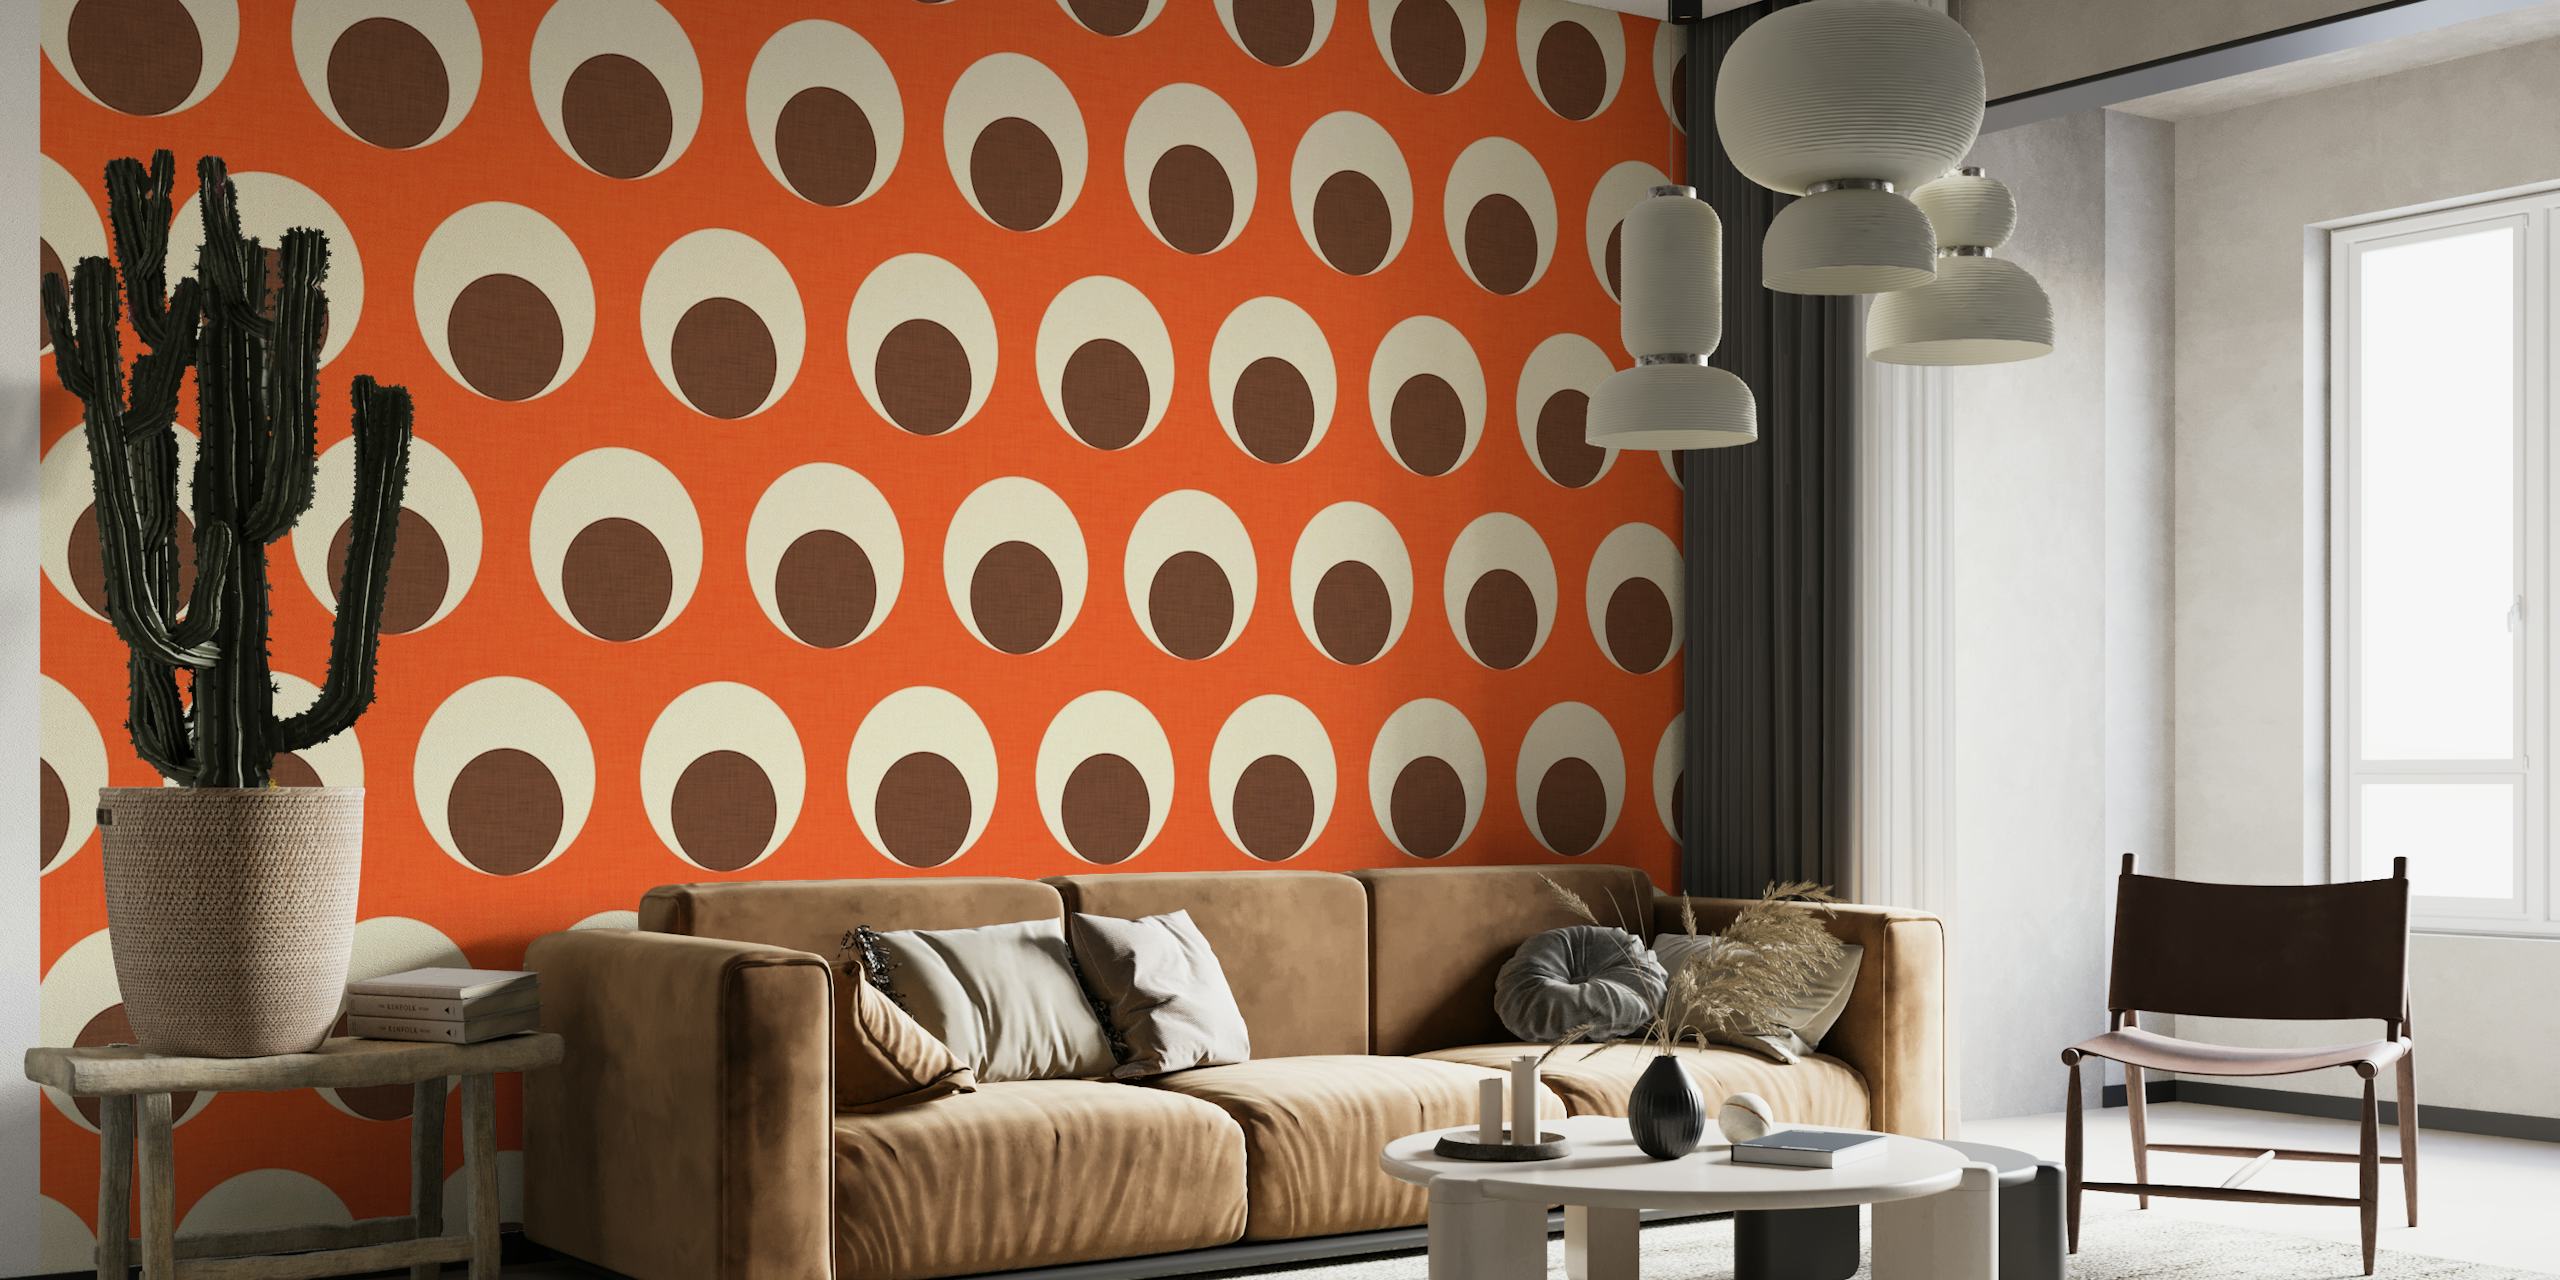 Orange and off-white dot pattern wall mural for modern interior design